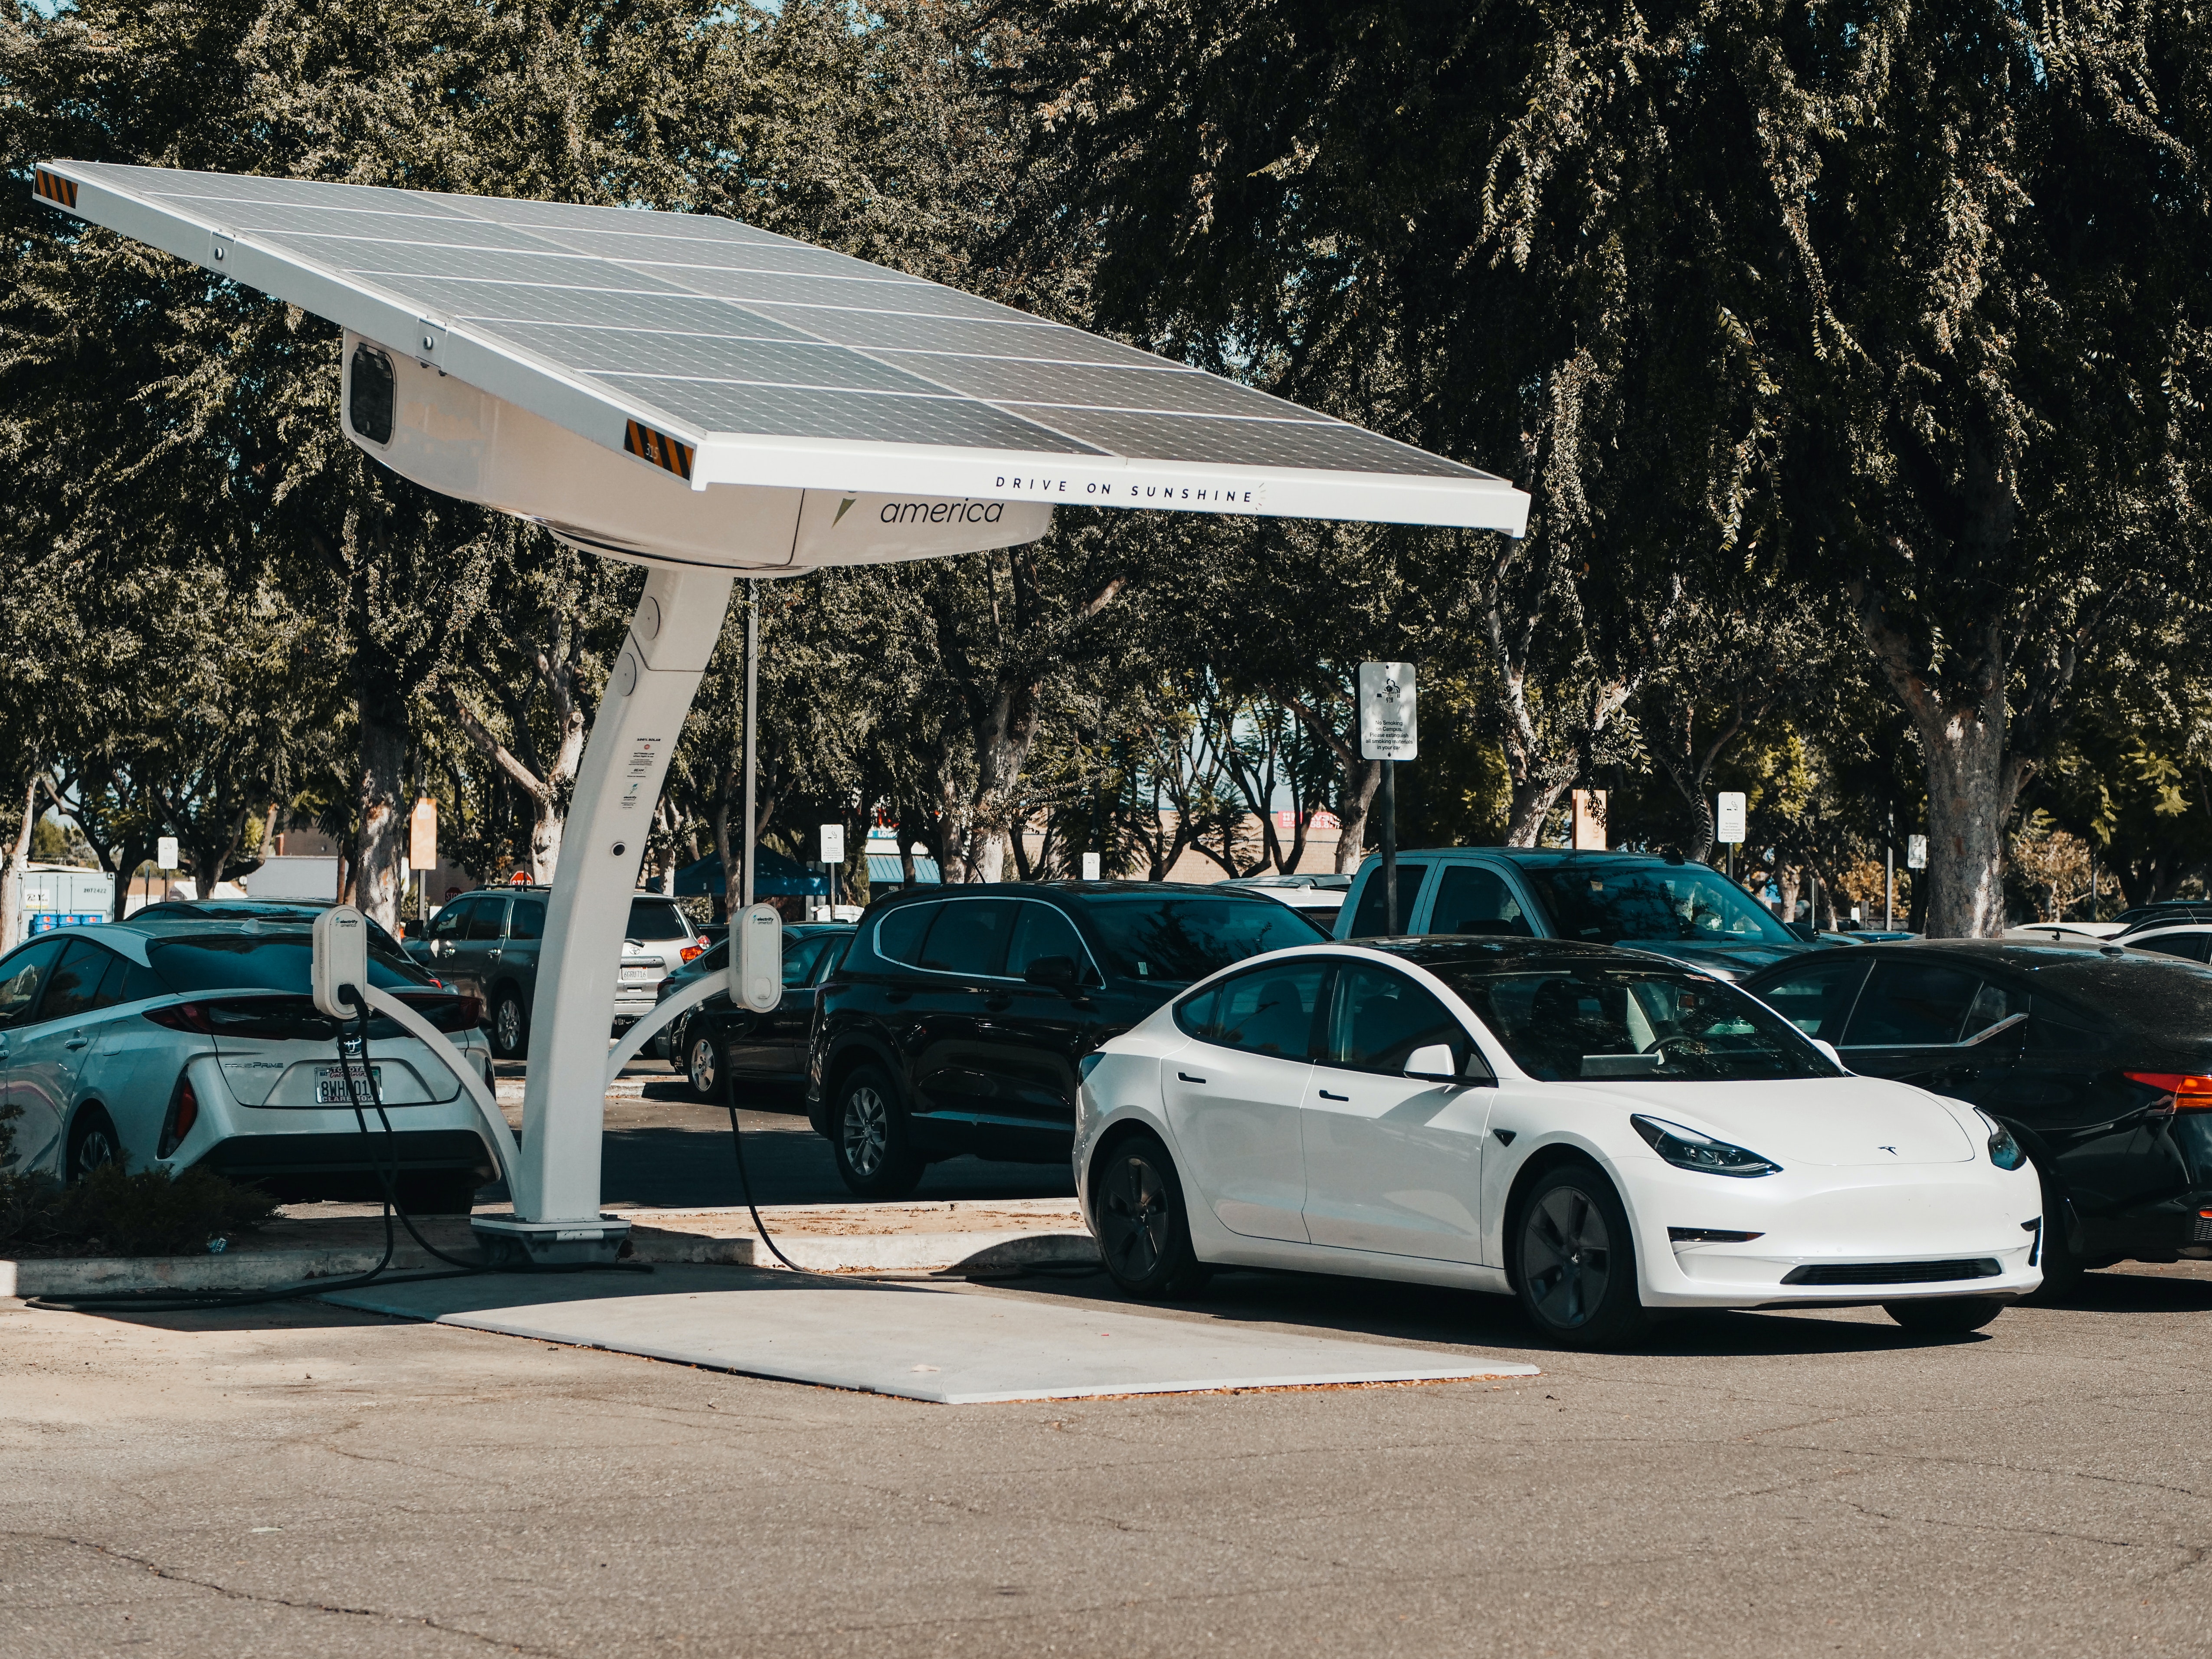 Exemplo de posto solar utilizado para abastecer carros elétricos e híbridos.